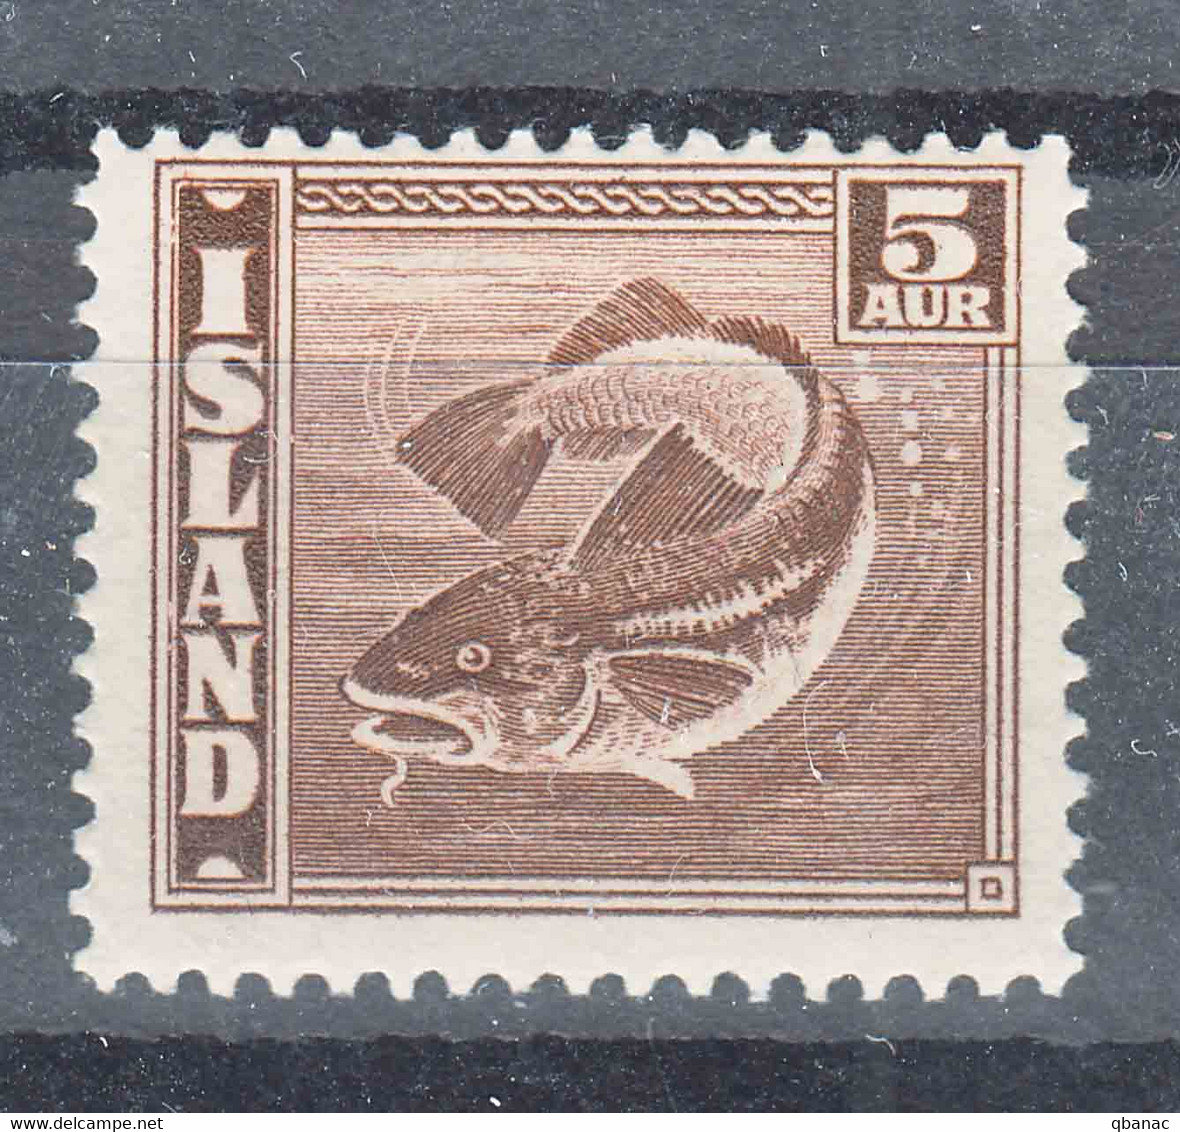 Iceland Island Ijsland 1939 Fish Mi#210 A Mint Never Hinged, Perforation 14 - Ongebruikt